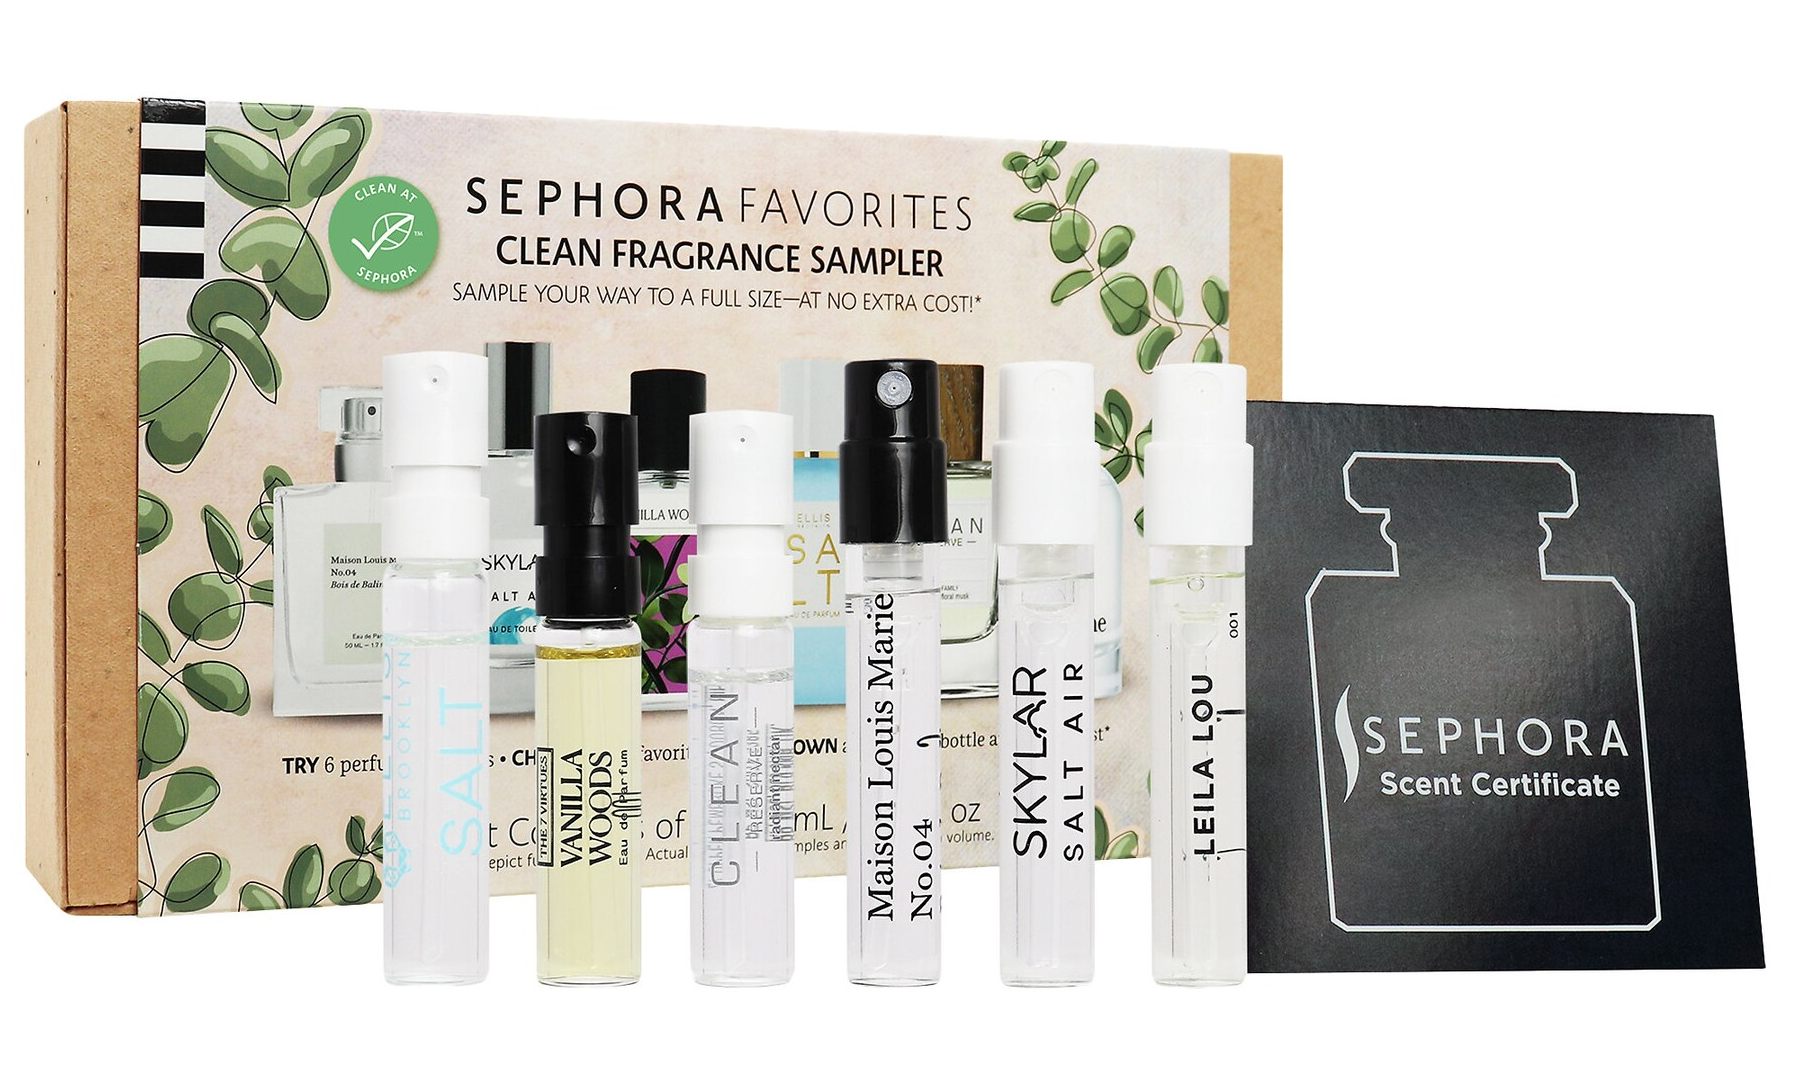 New Sephora Favorites Self Clean Perfume Sampler Set! - Hello Subscription